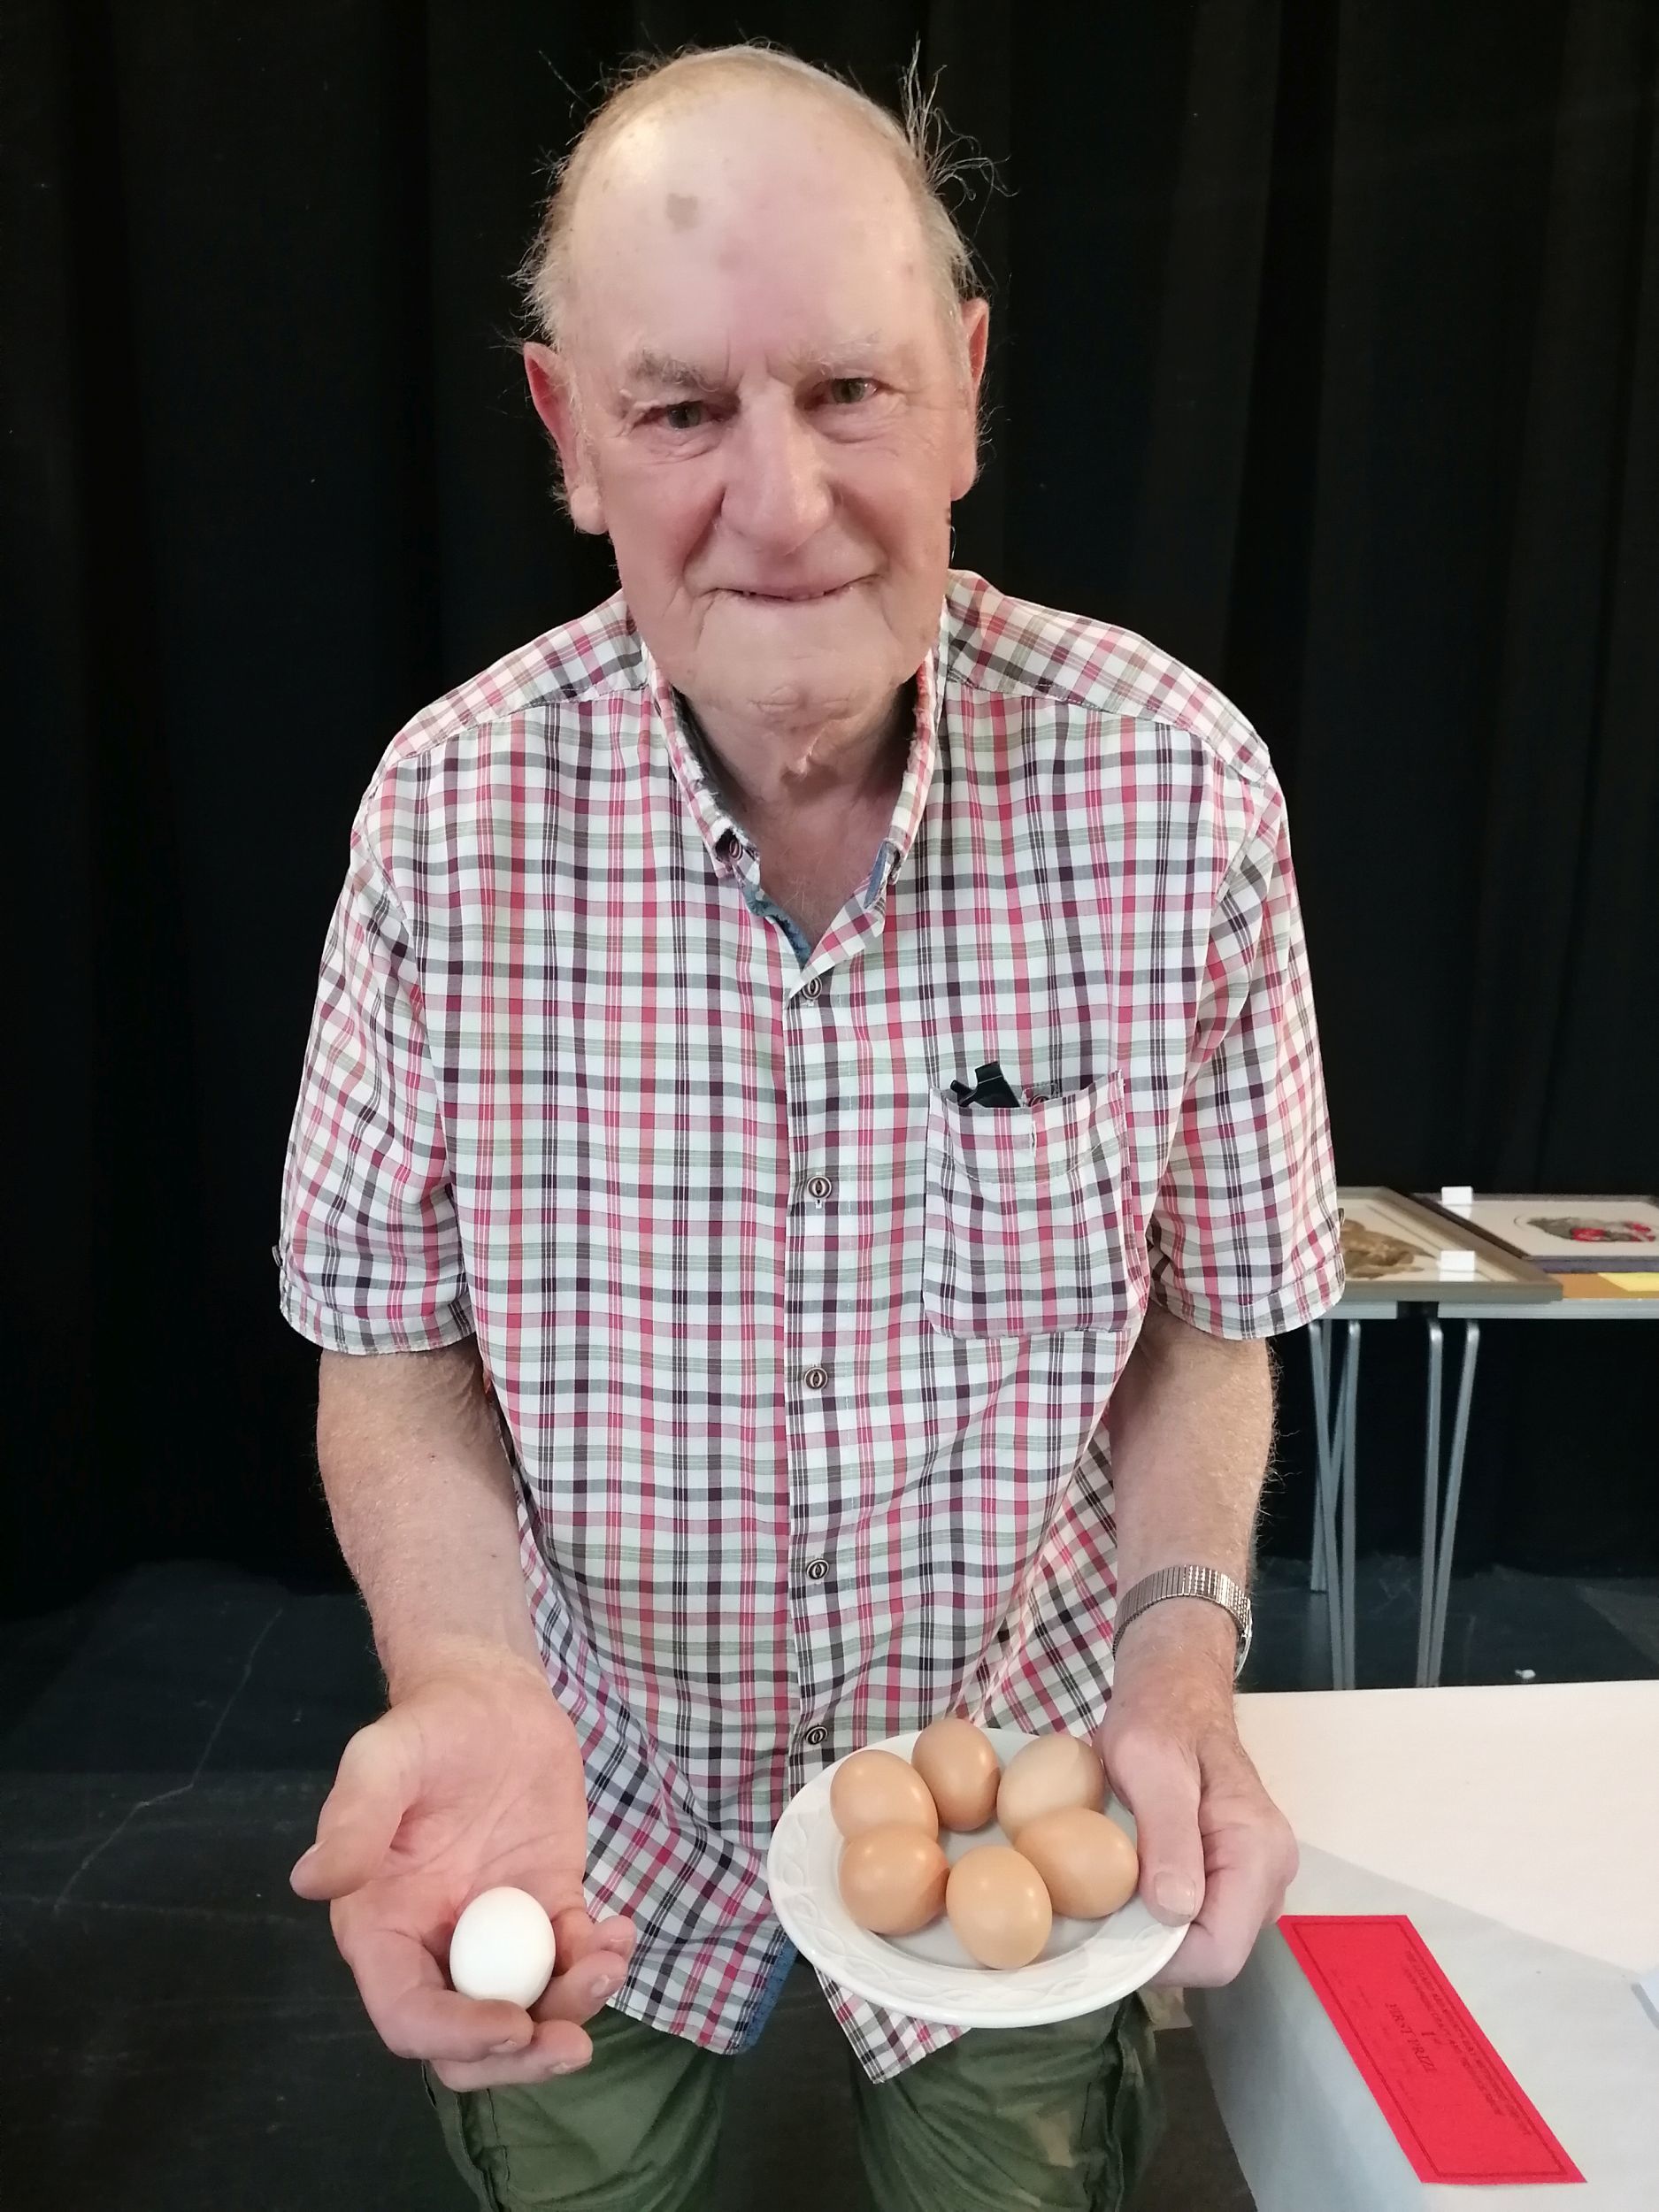 John Hocking won best eggs